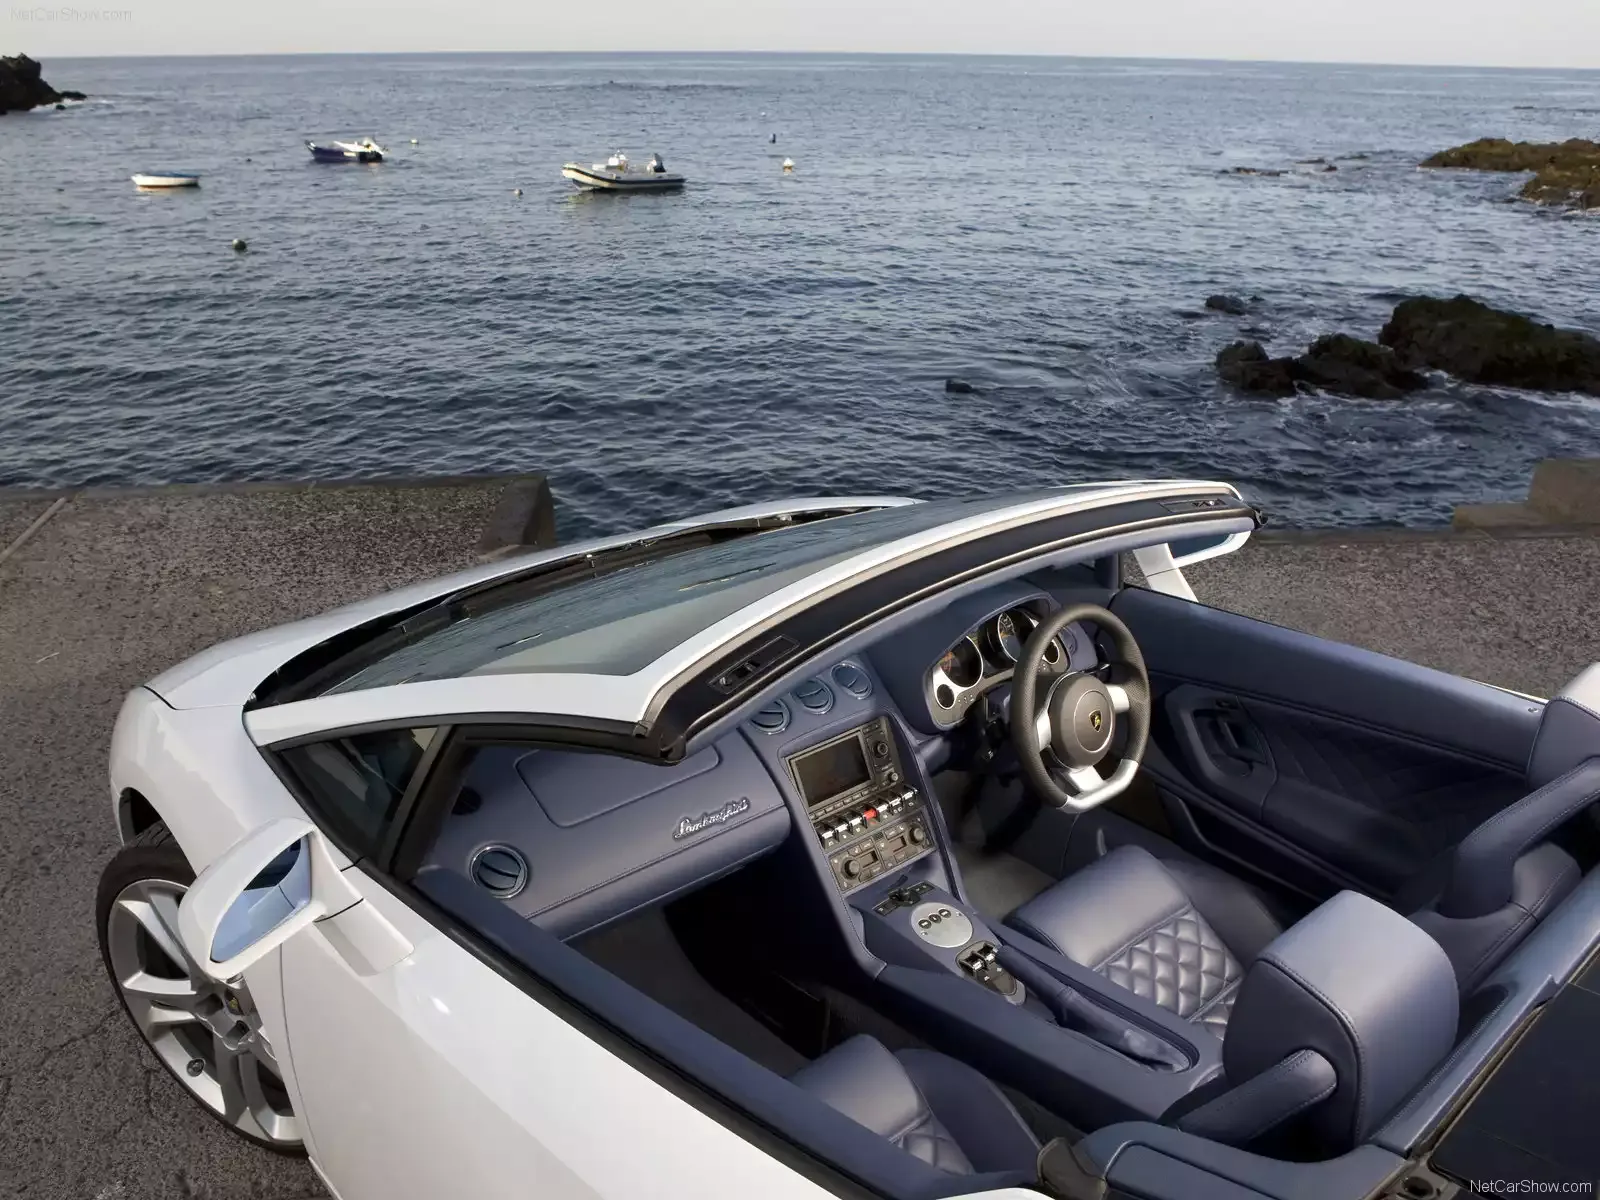 Hình ảnh siêu xe Lamborghini Gallardo LP560-4 Spyder 2009 & nội ngoại thất